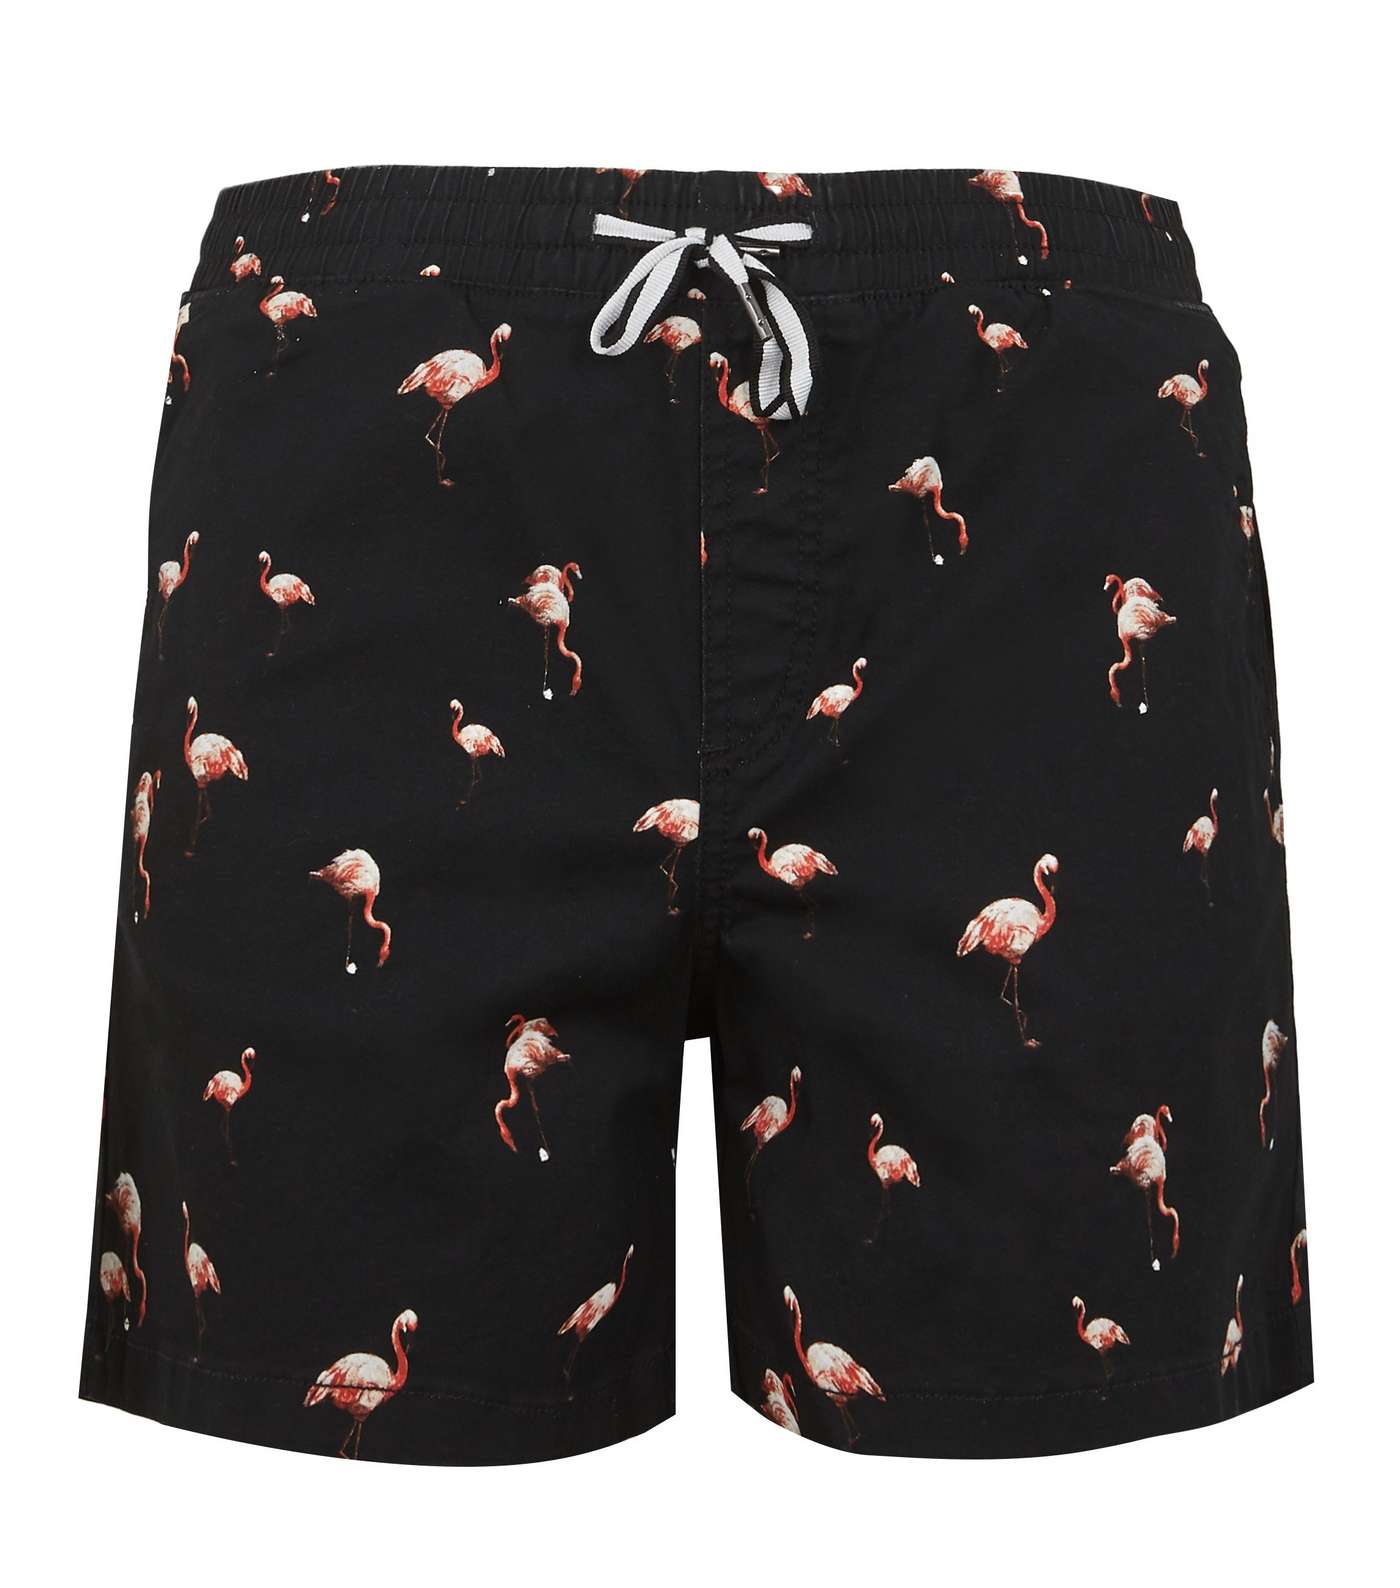 Jack & Jones Black Flamingo Swim Shorts | New Look